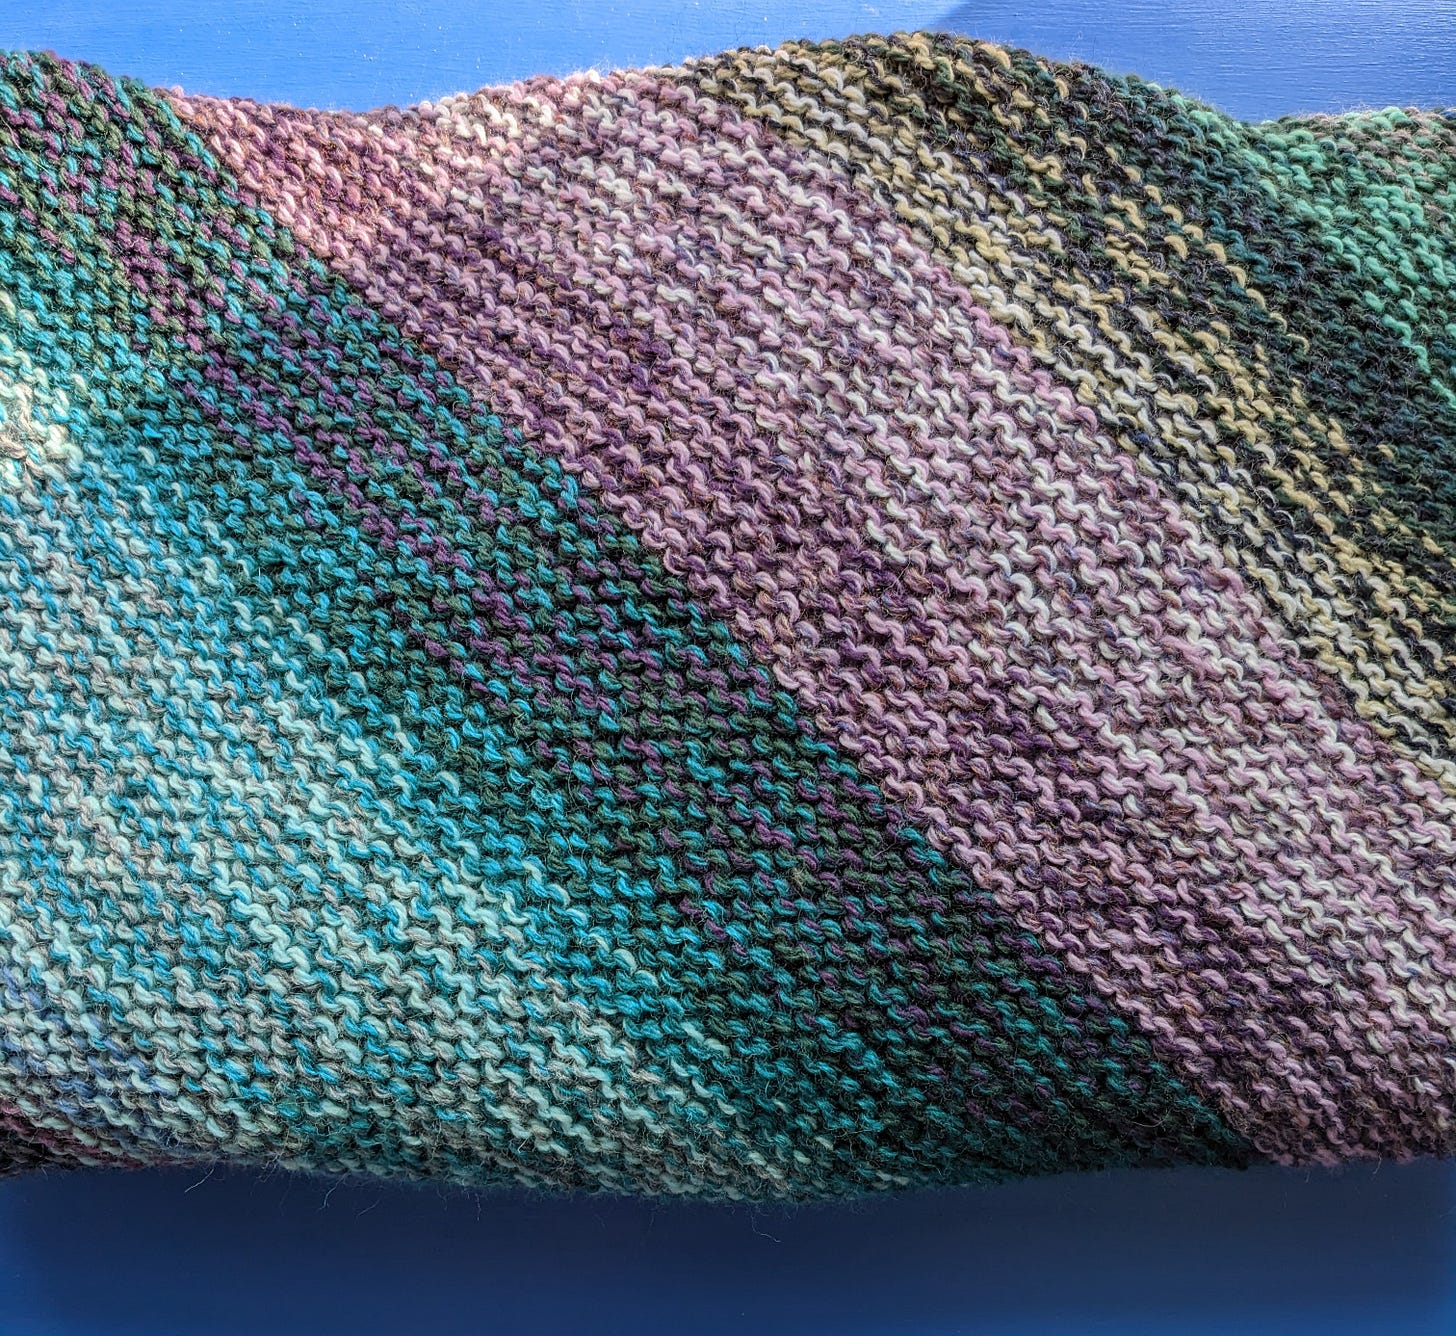  A variegated knit blanket